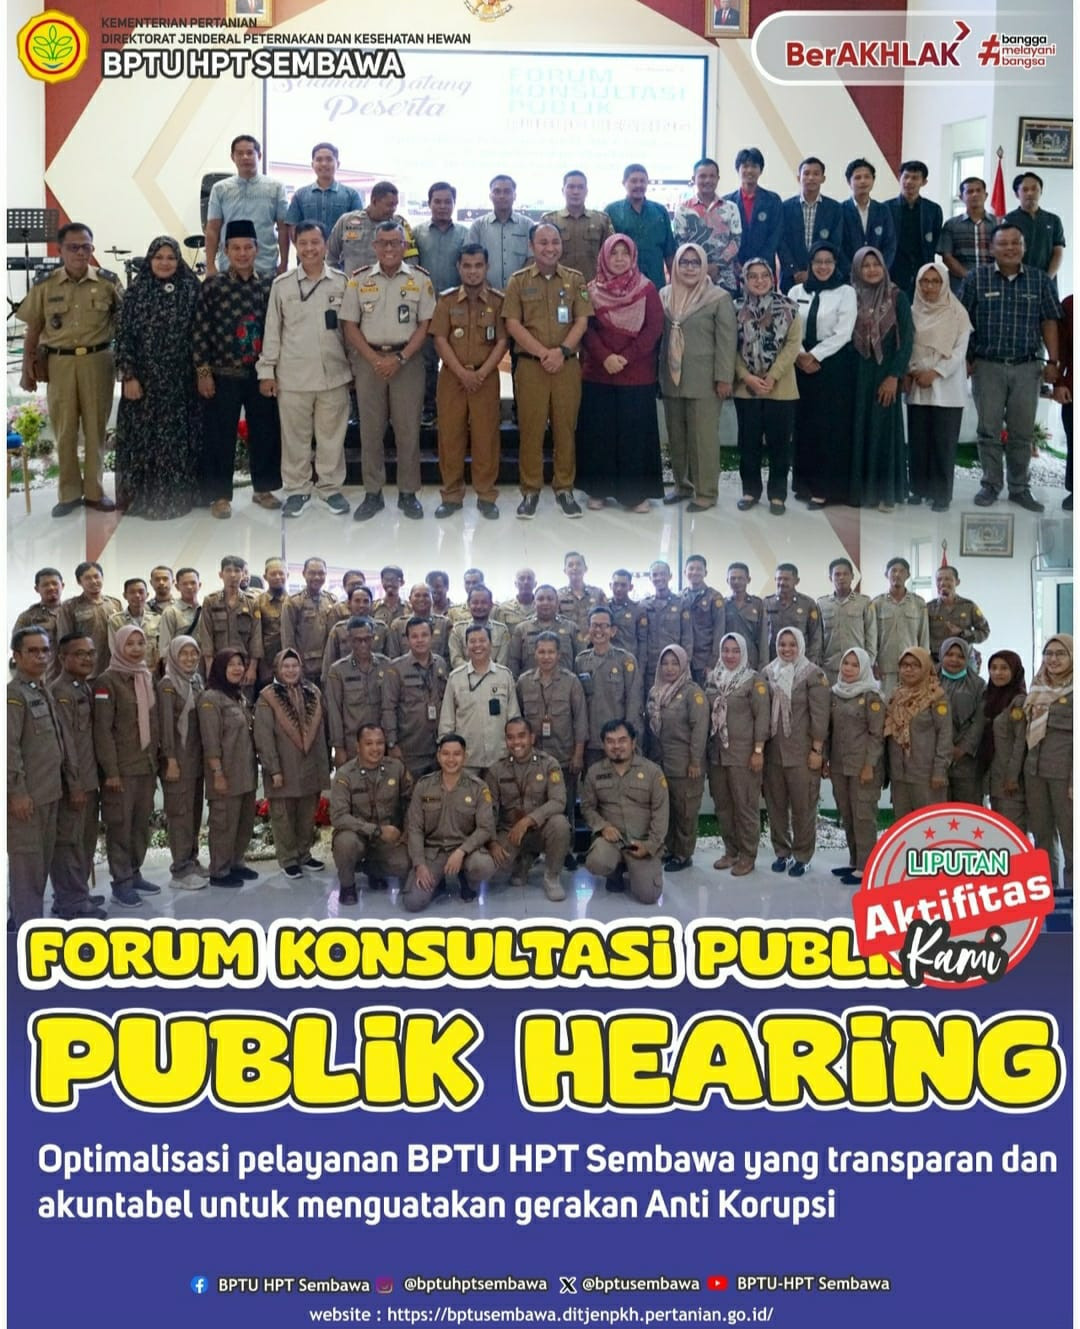 Forum Konsultasi Publik / Publik Hearing